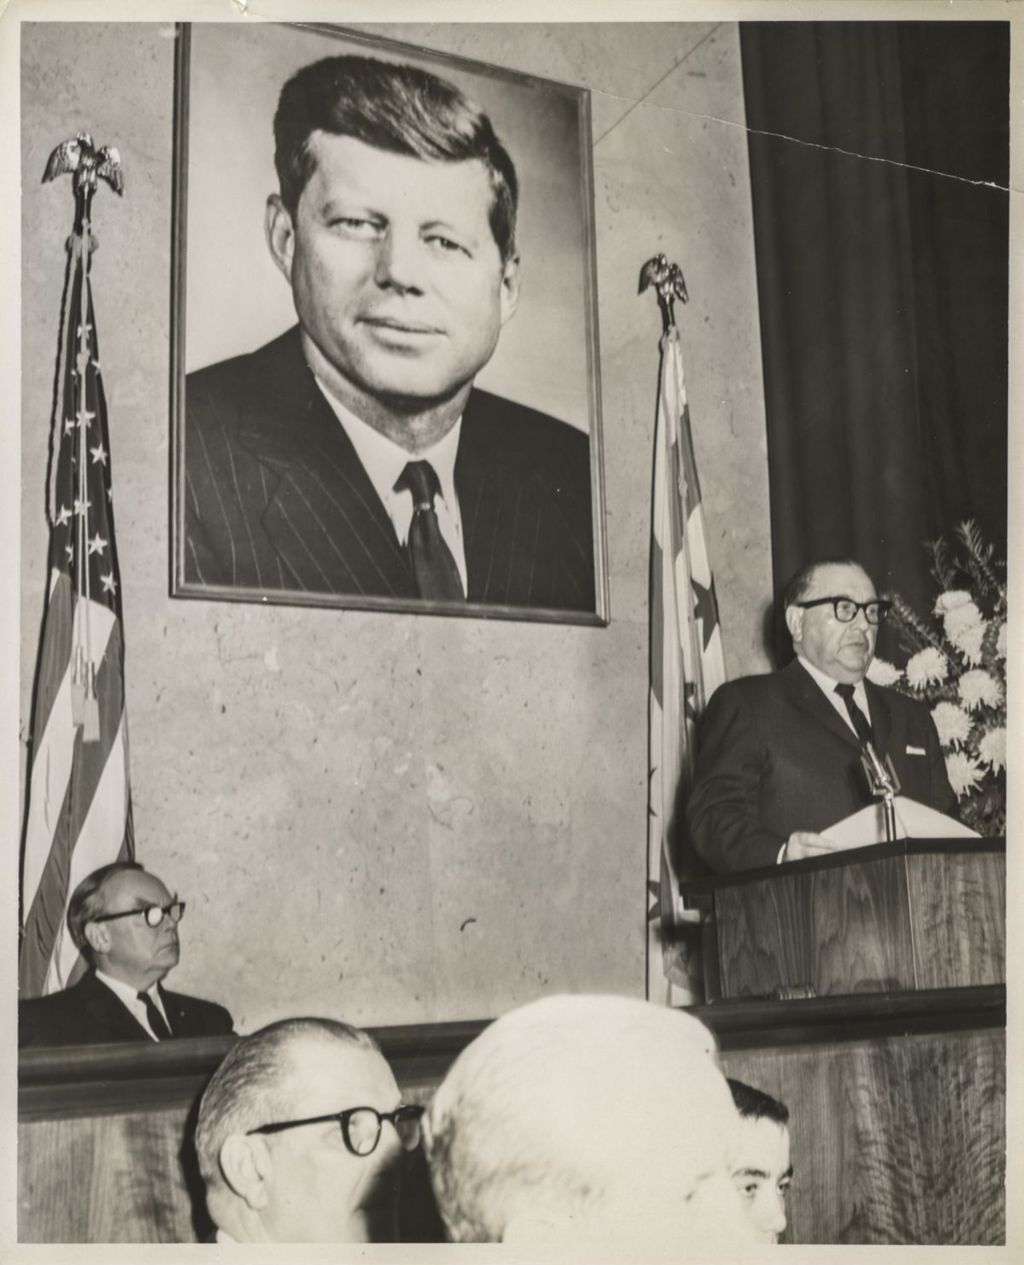 Chicago City Council memorial service for John F. Kennedy